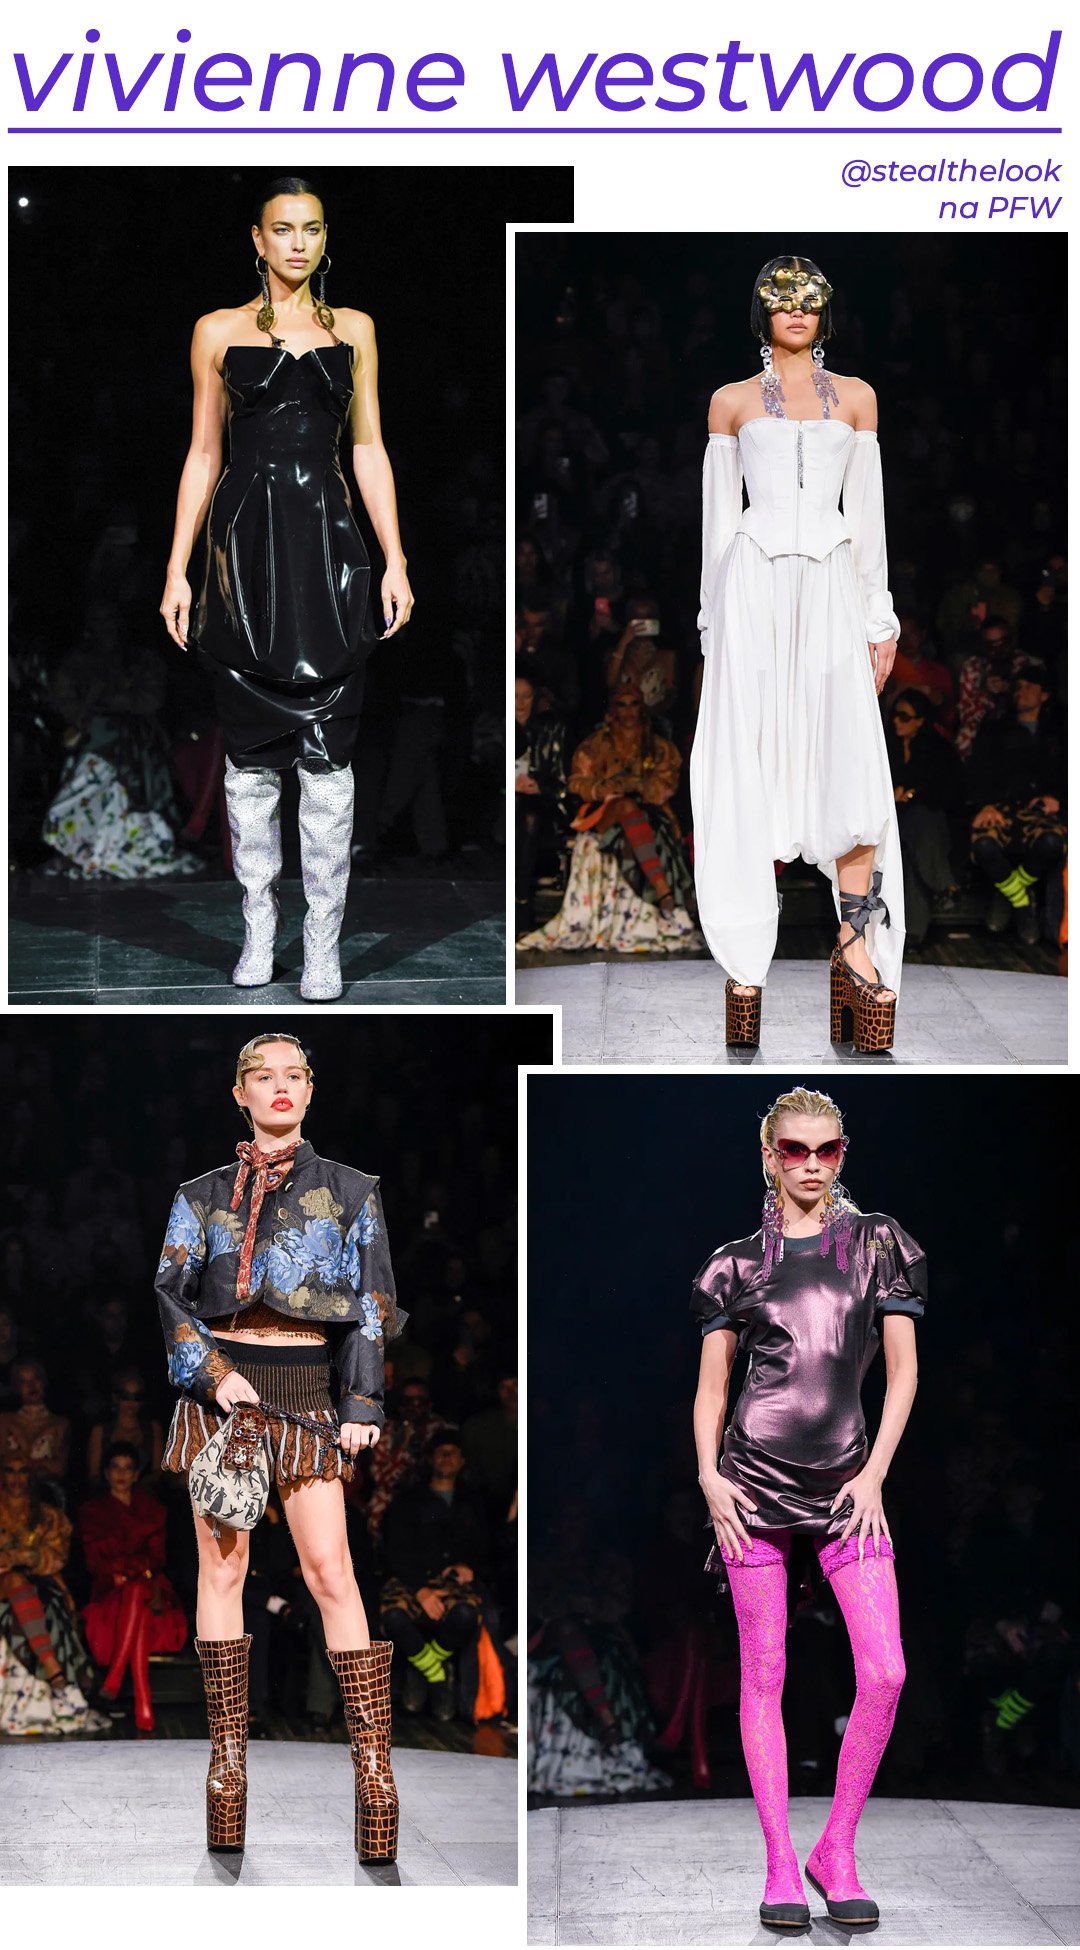 Andreas Kronthaler para Vivienne Westwood S/S 2023 - roupas diversas - Paris Fashion Week - Primavera - modelo andando pela passarela - https://stealthelook.com.br